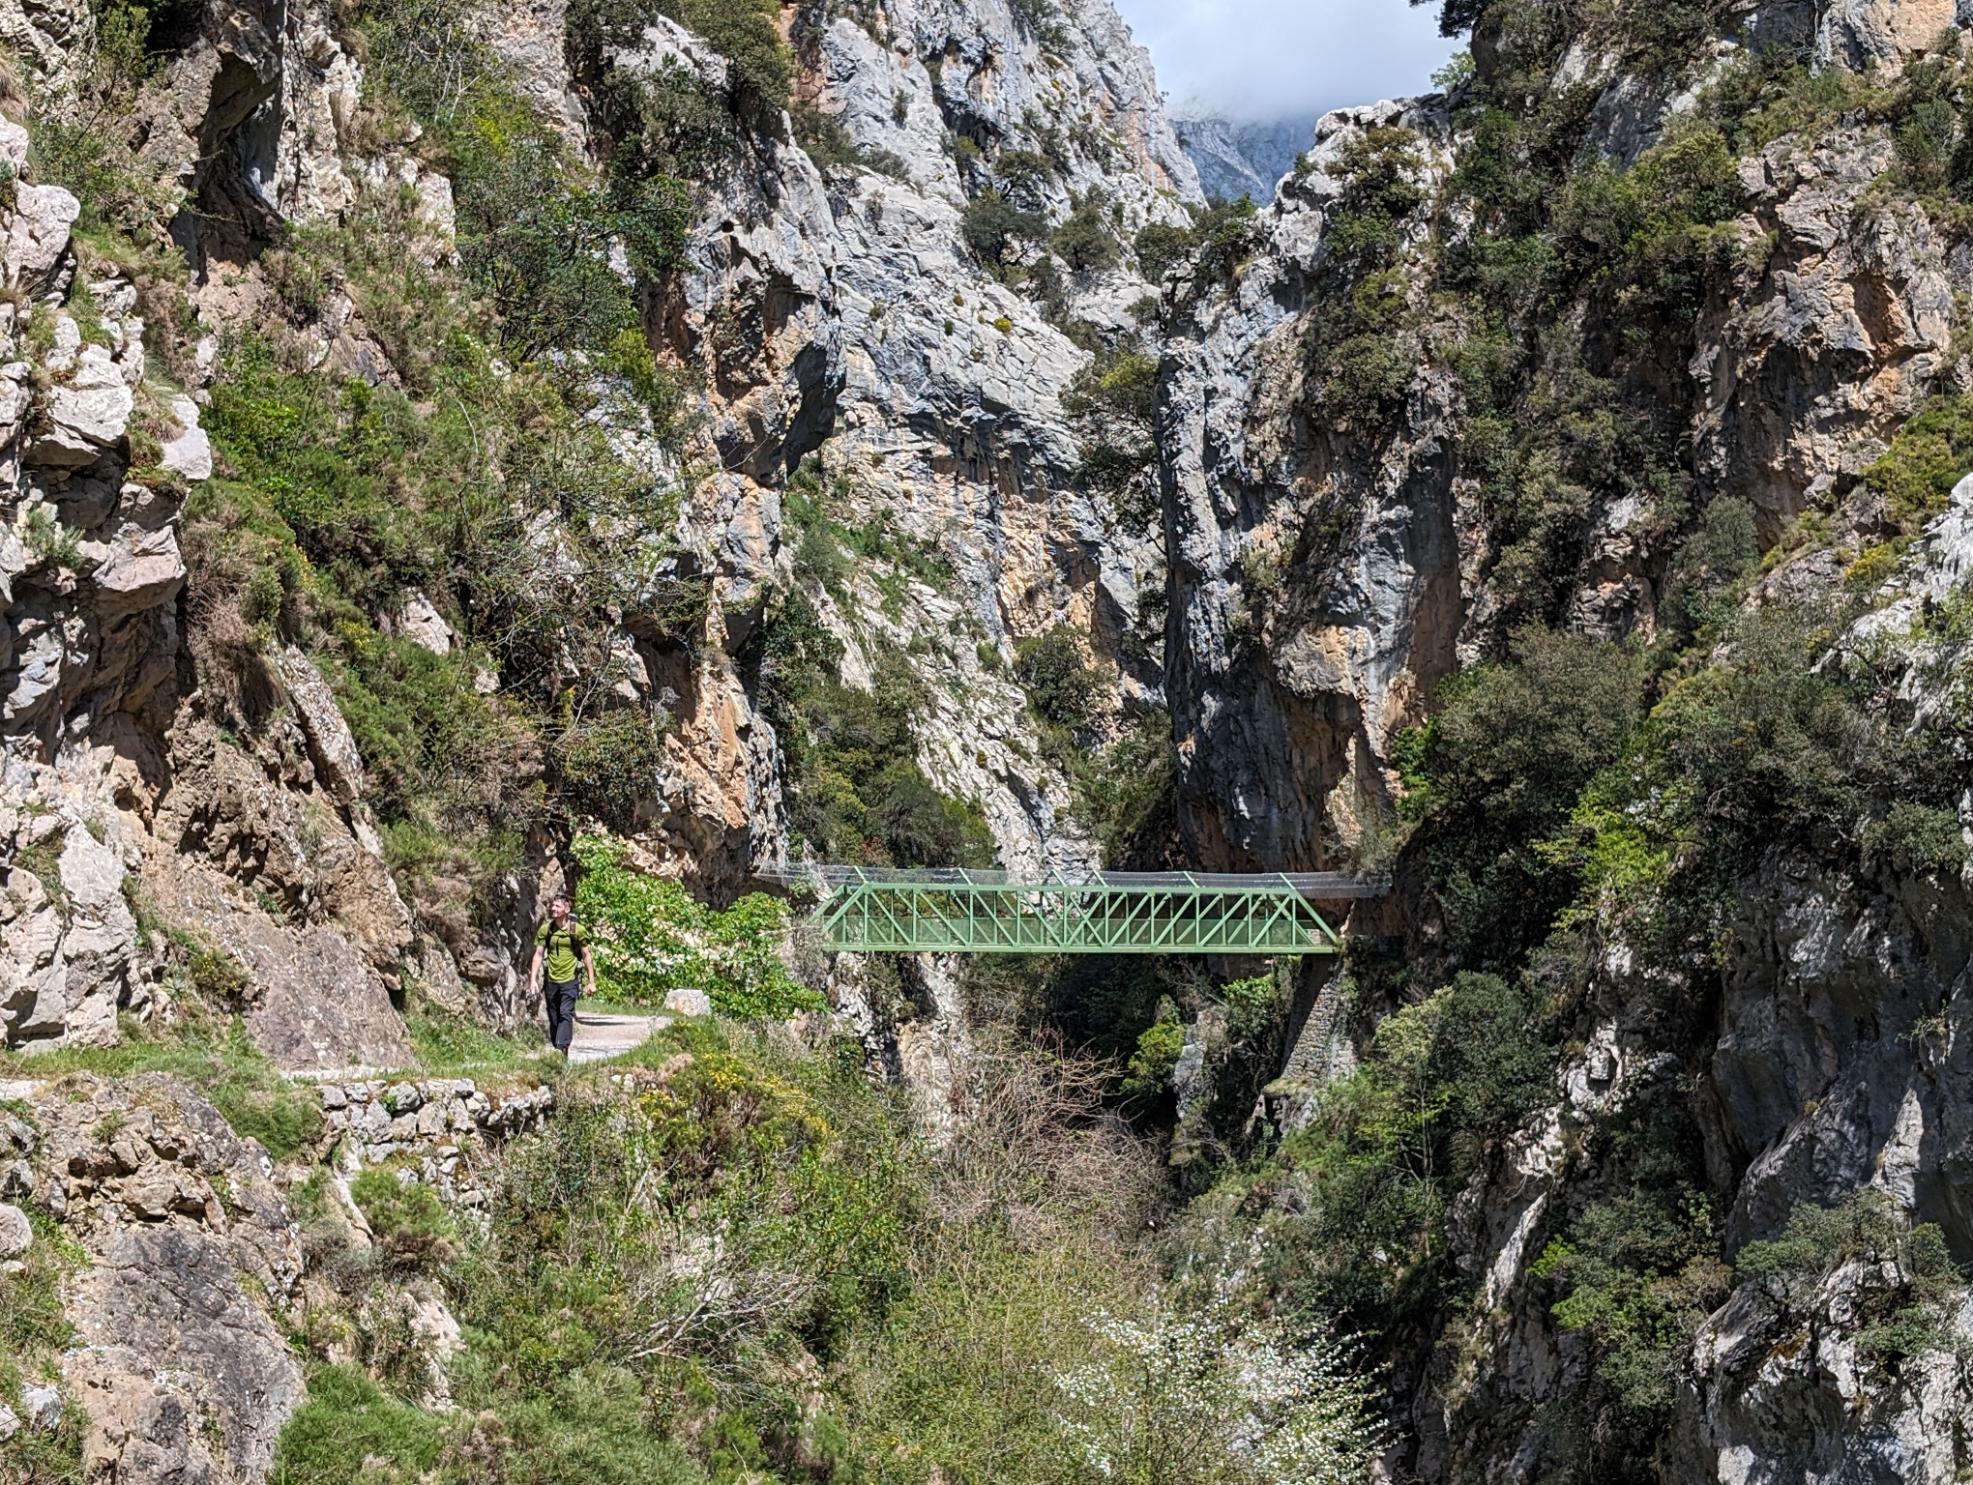 The Puente de Los Rebecos bridge crossing the Cares gorge. Photo: Stuart Kenny